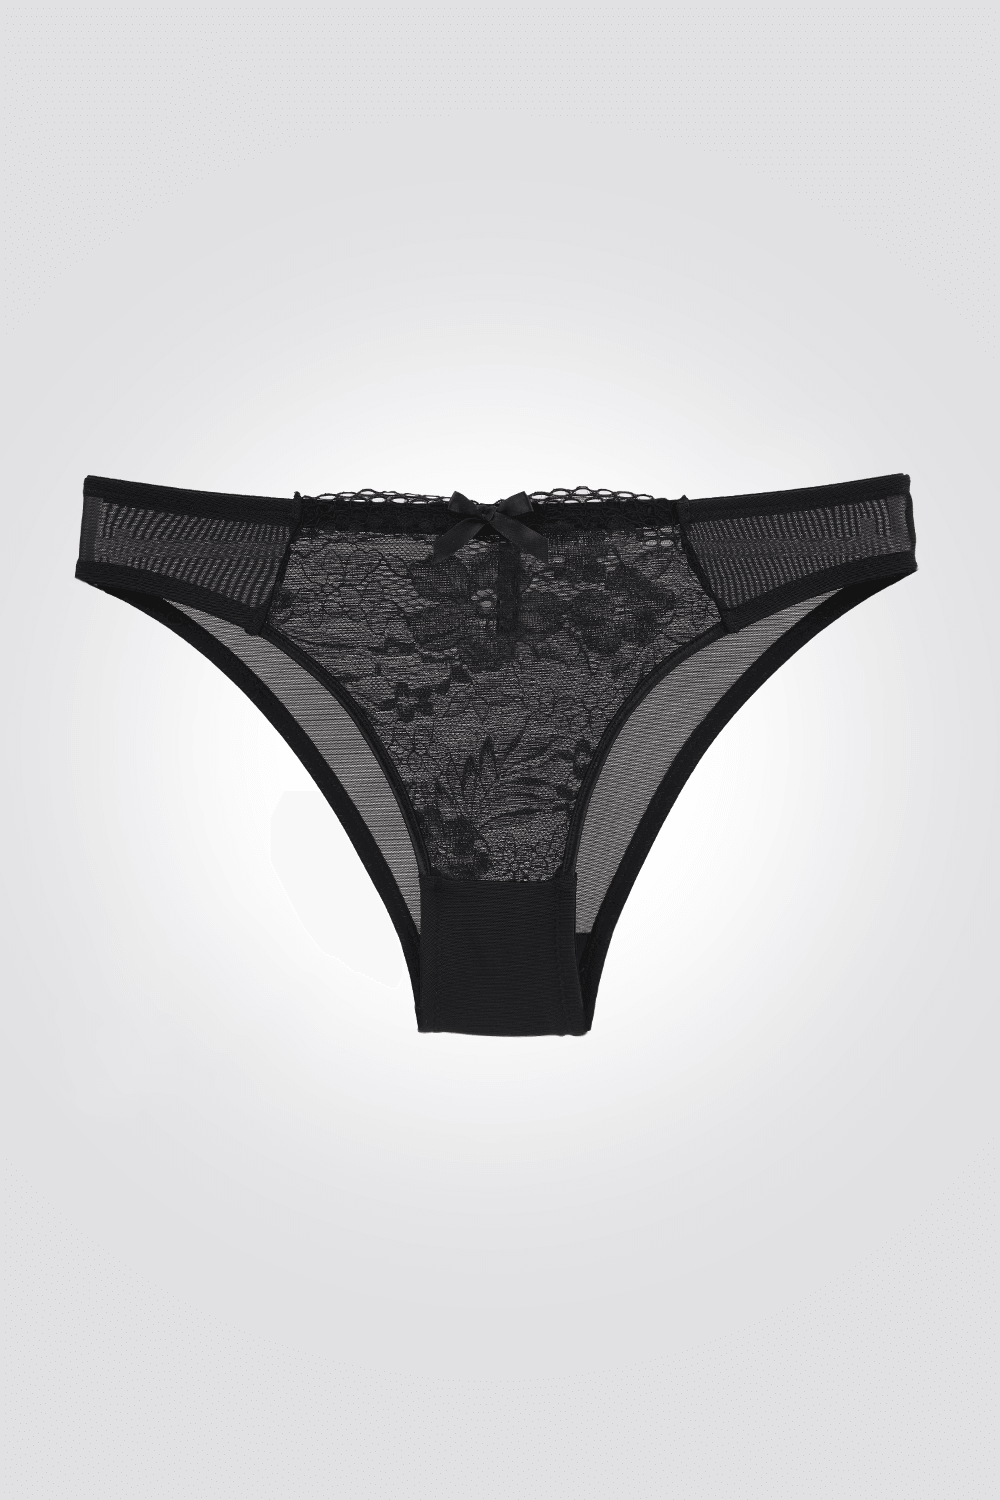 BONITA DE MAS - תחתון מיני לנשים בצבע שחור - MASHBIR//365